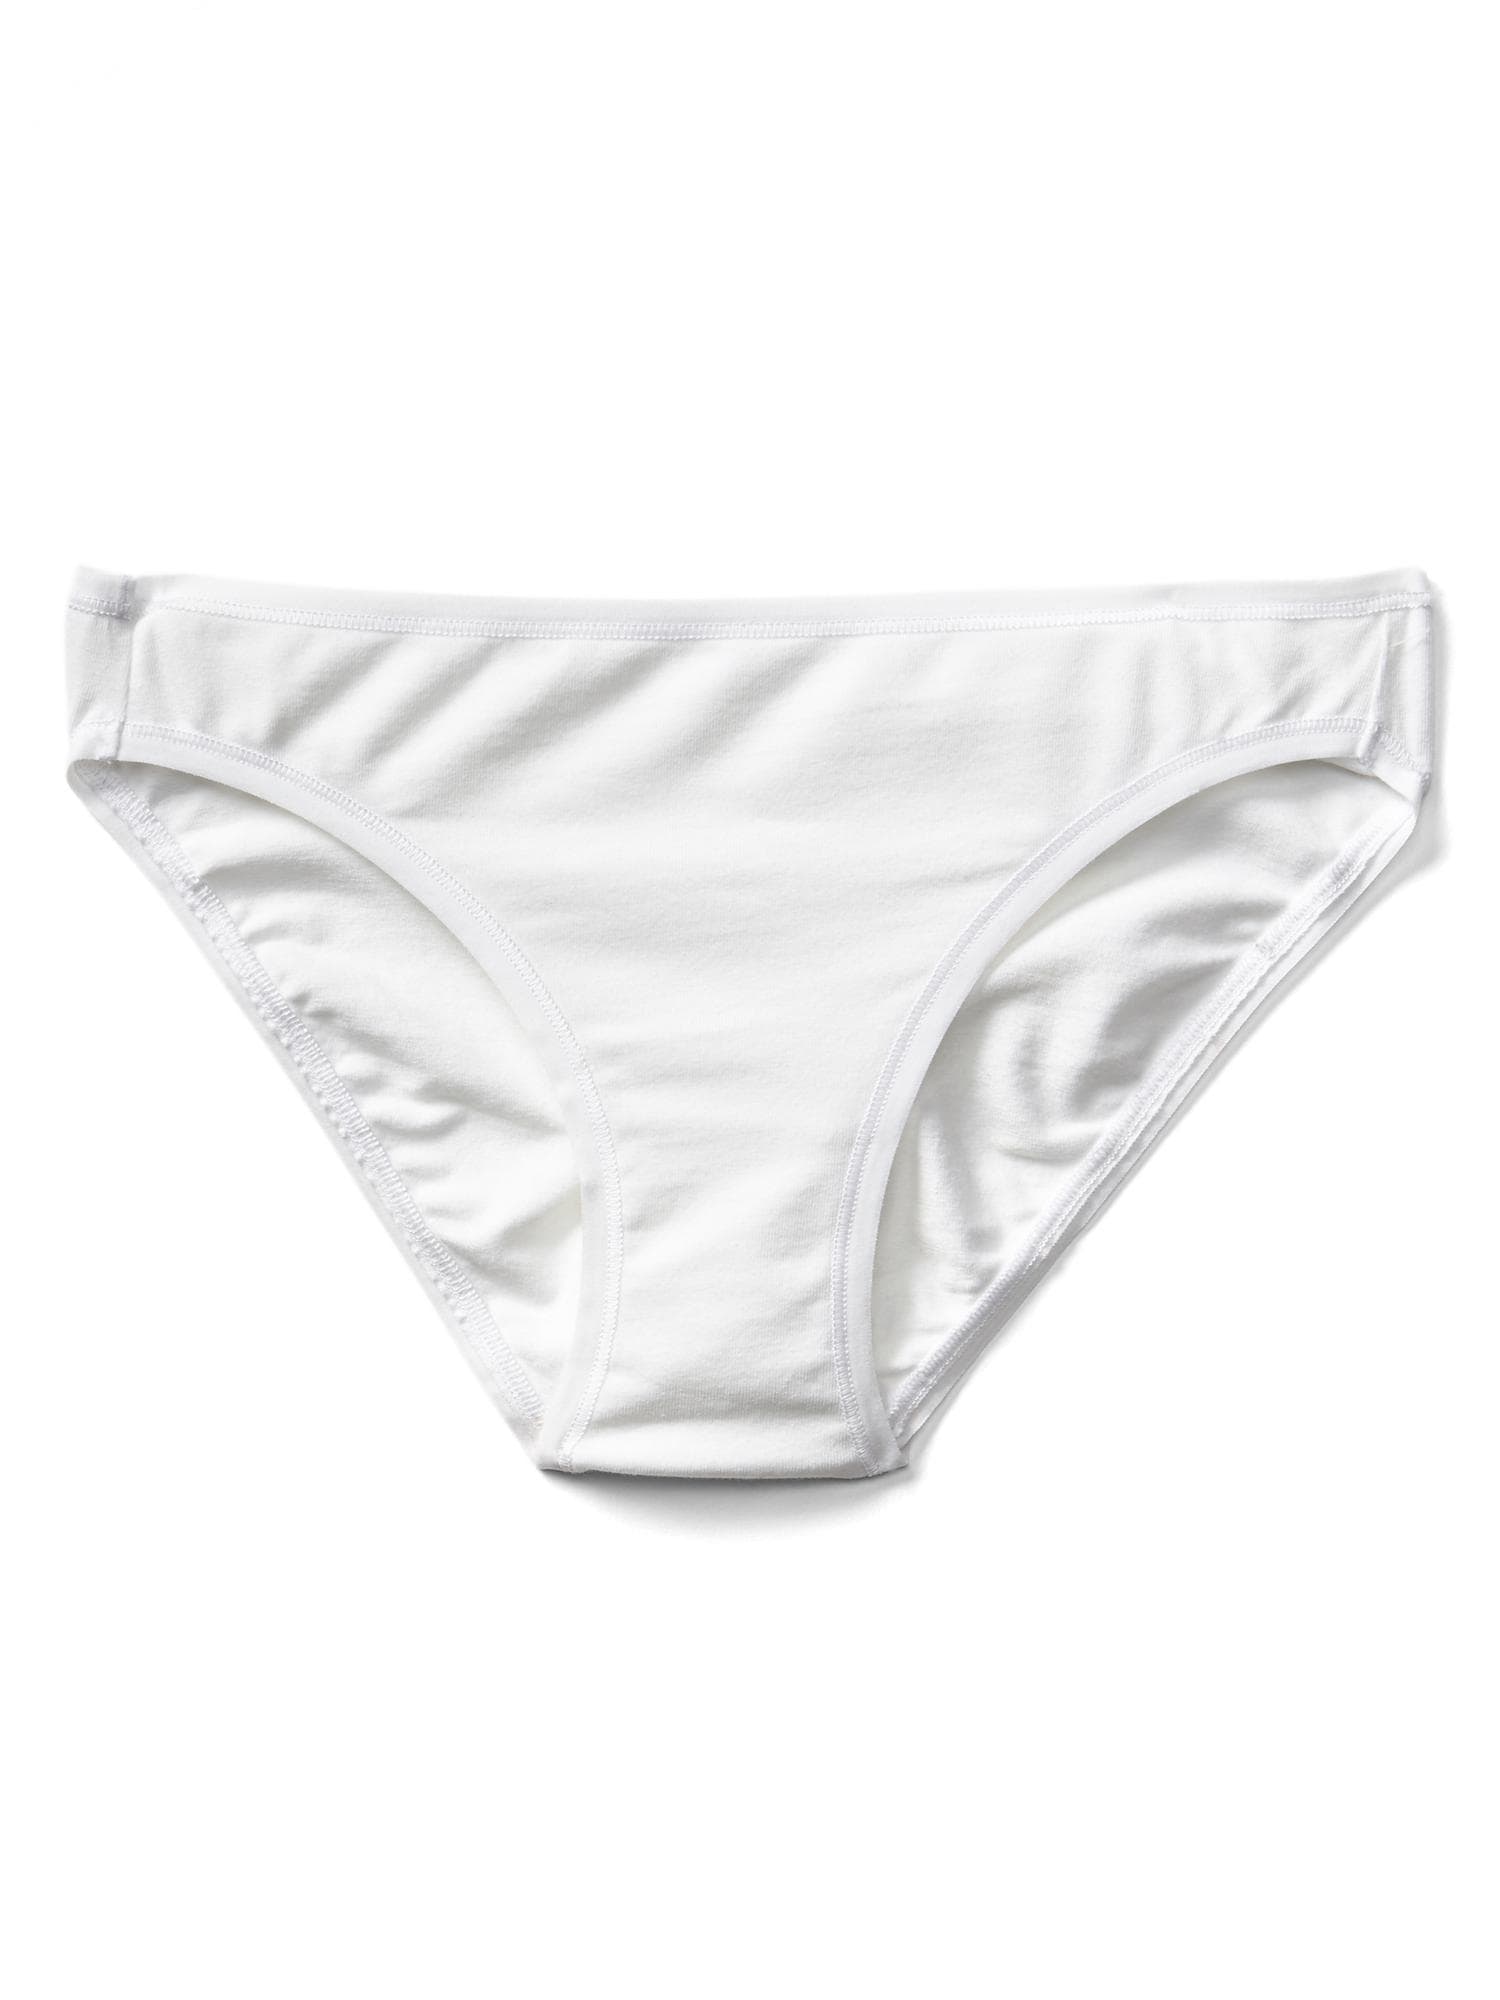 GAP Women's Stretch Cotton Bikini, Holiday Multi, X-Small 